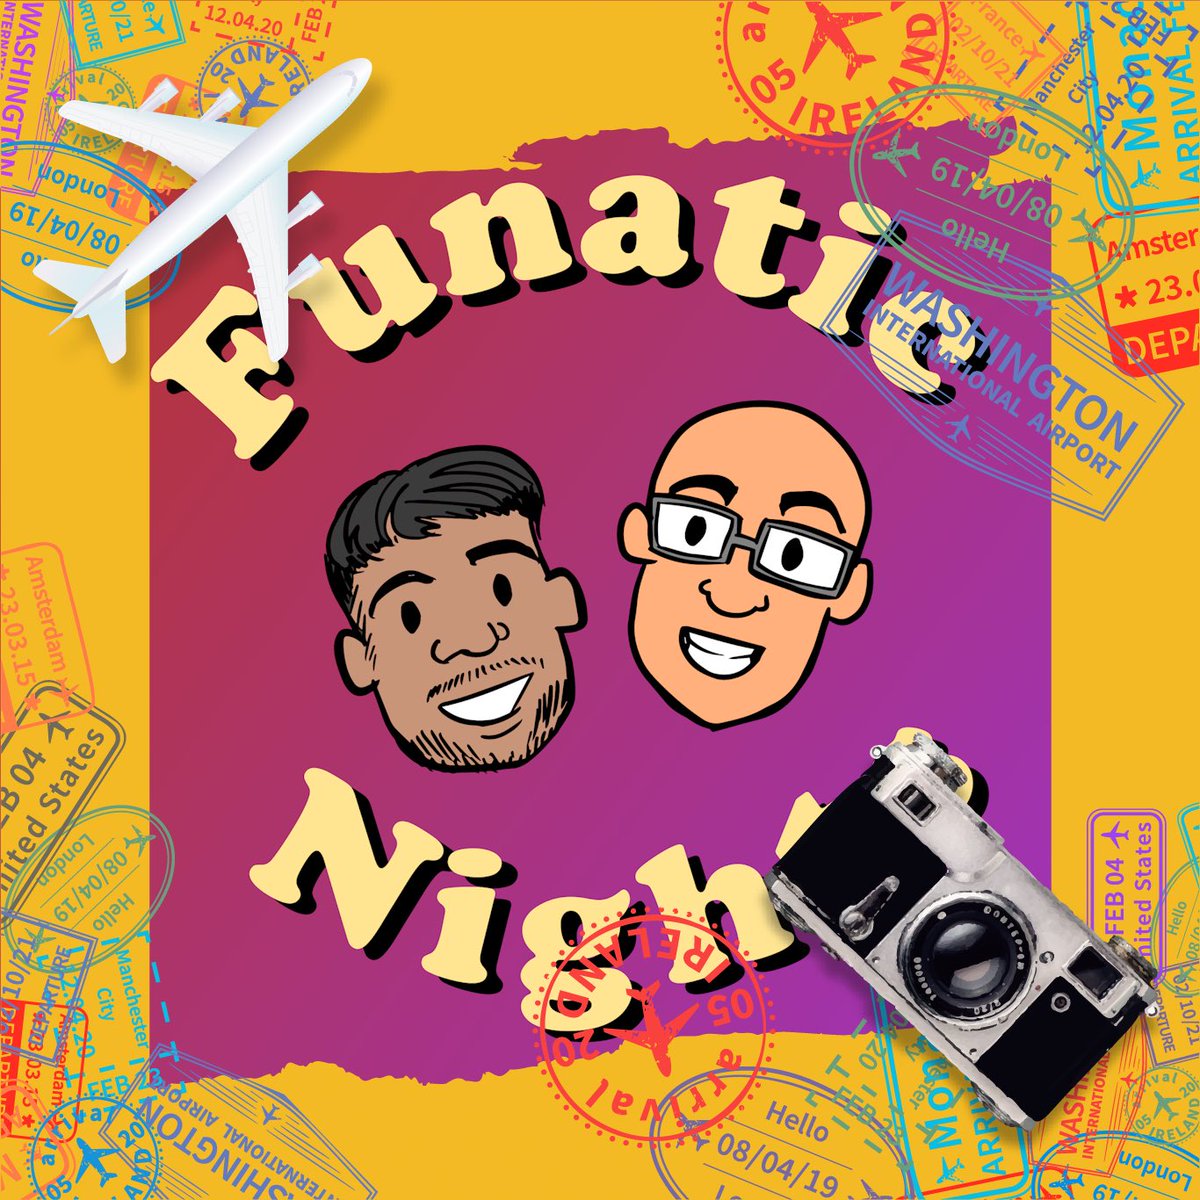 Greetings #FunkoFunatics! Our next #FunaticNights IG Live will be this Friday, April 5th at 8:30pm EST! Check the link below! 😄👑✈️ #Fun #FunkoPop #FunkoFamily #C2E2 @OriginalFunko tinyurl.com/2s3bwe55